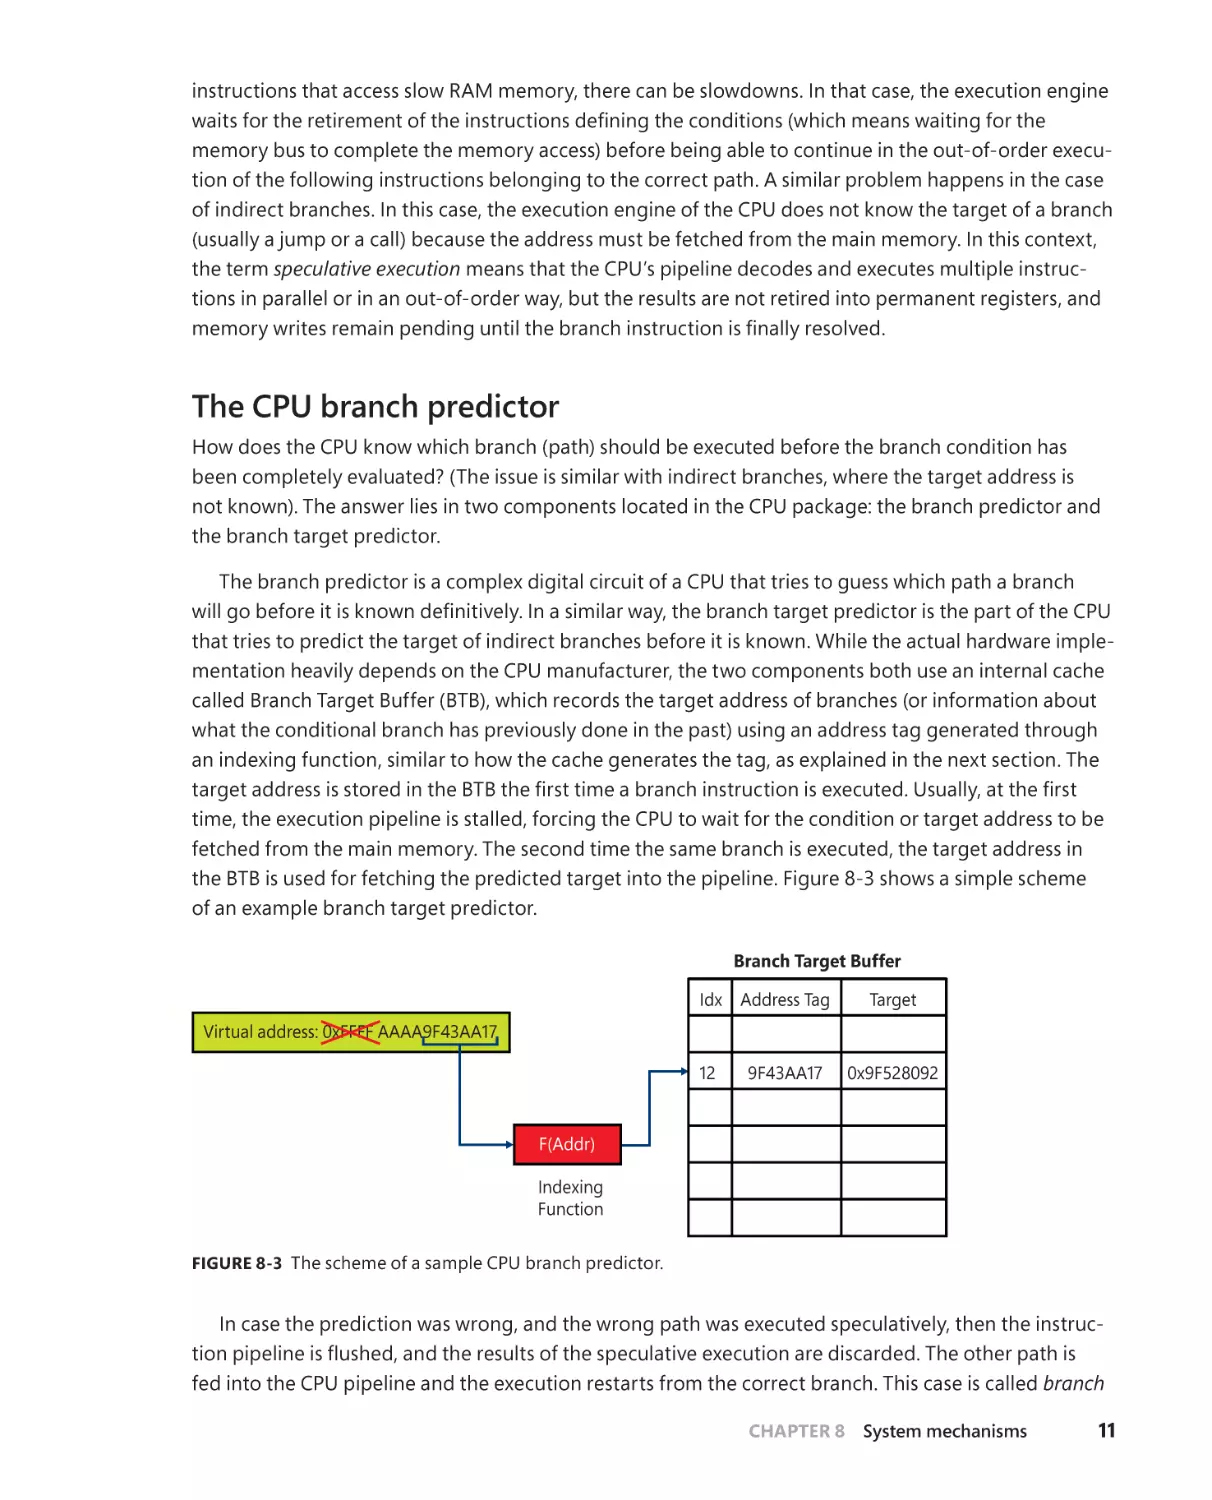 The CPU branch predictor